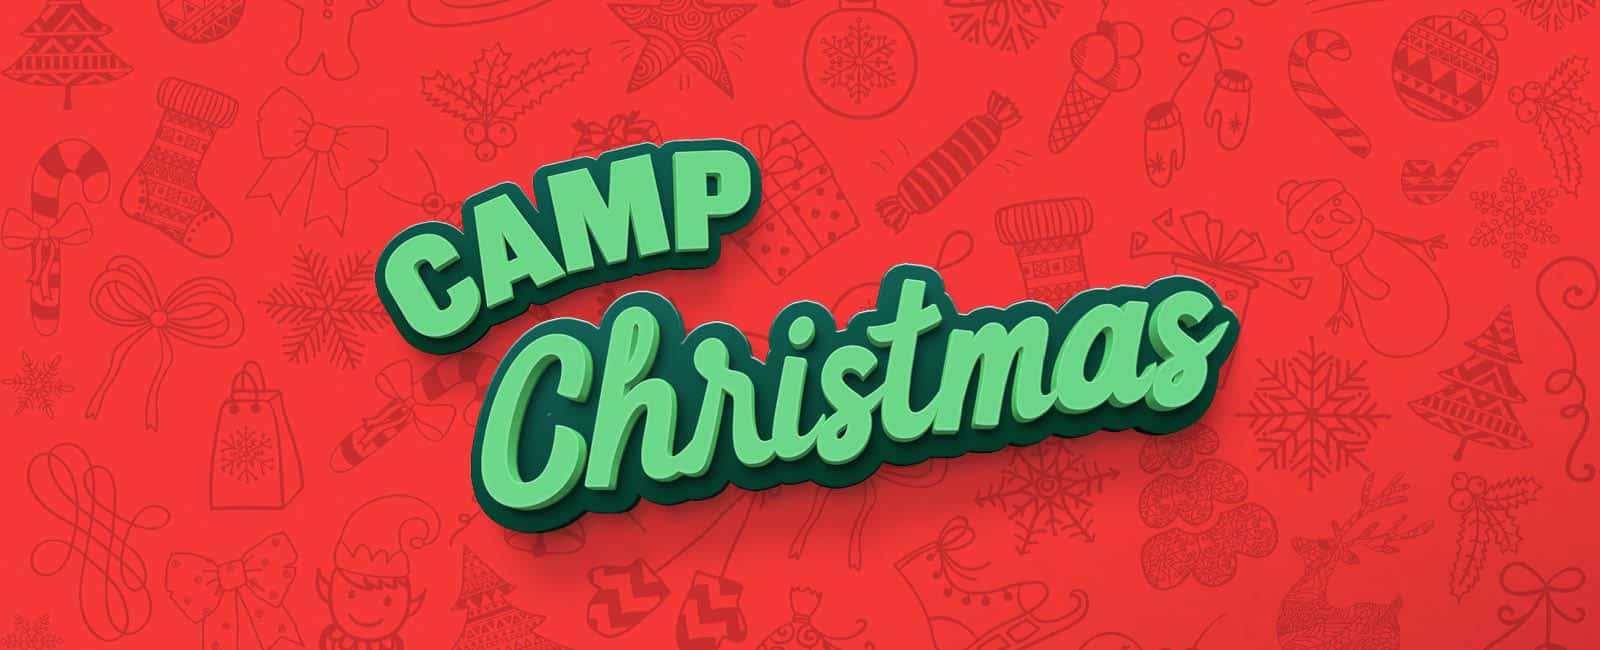 OC_Camp_Christmas-web-header-1600x650-web-assets.jpg